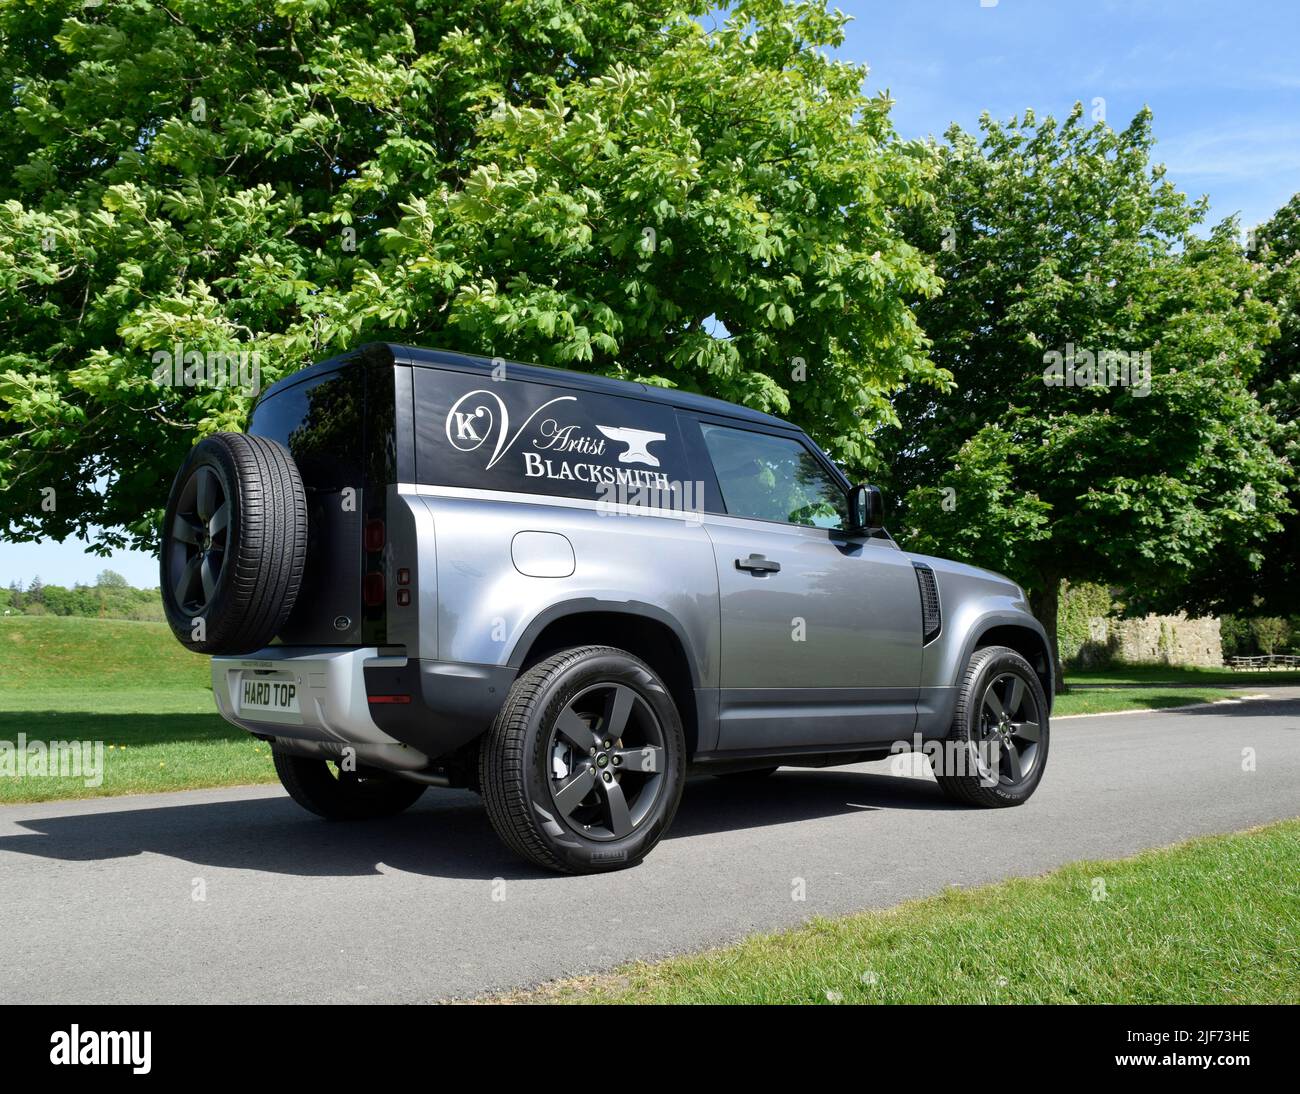 2021 prototipo Land Rover Defender Foto Stock